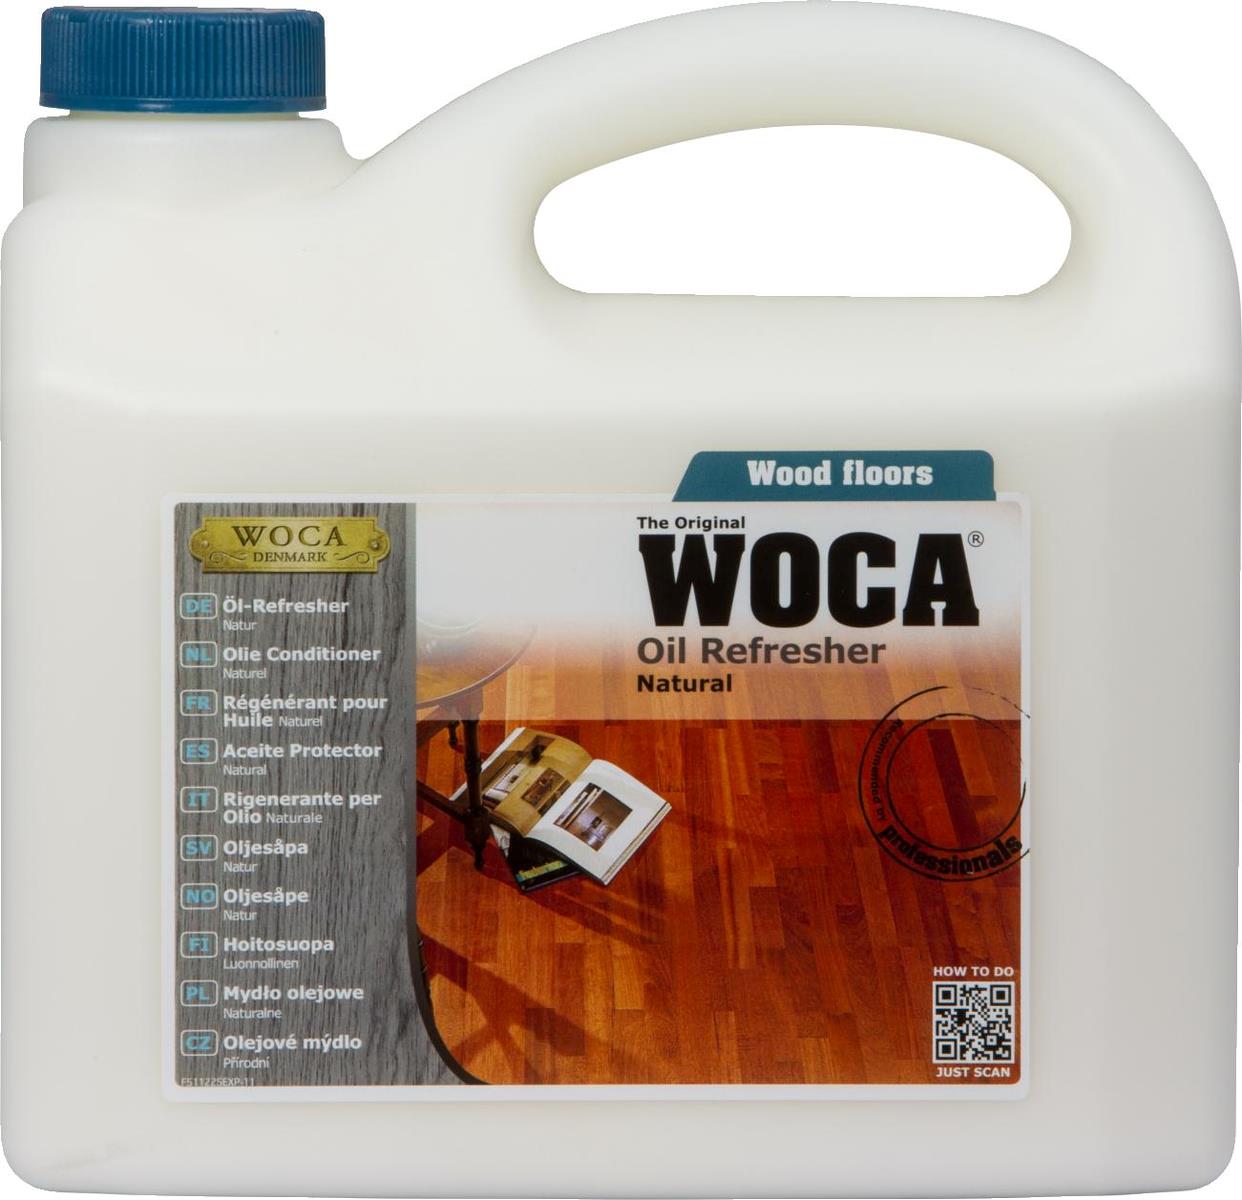 woca oil refresher - מרענן שמן לפרקט עץ בגמר שמן